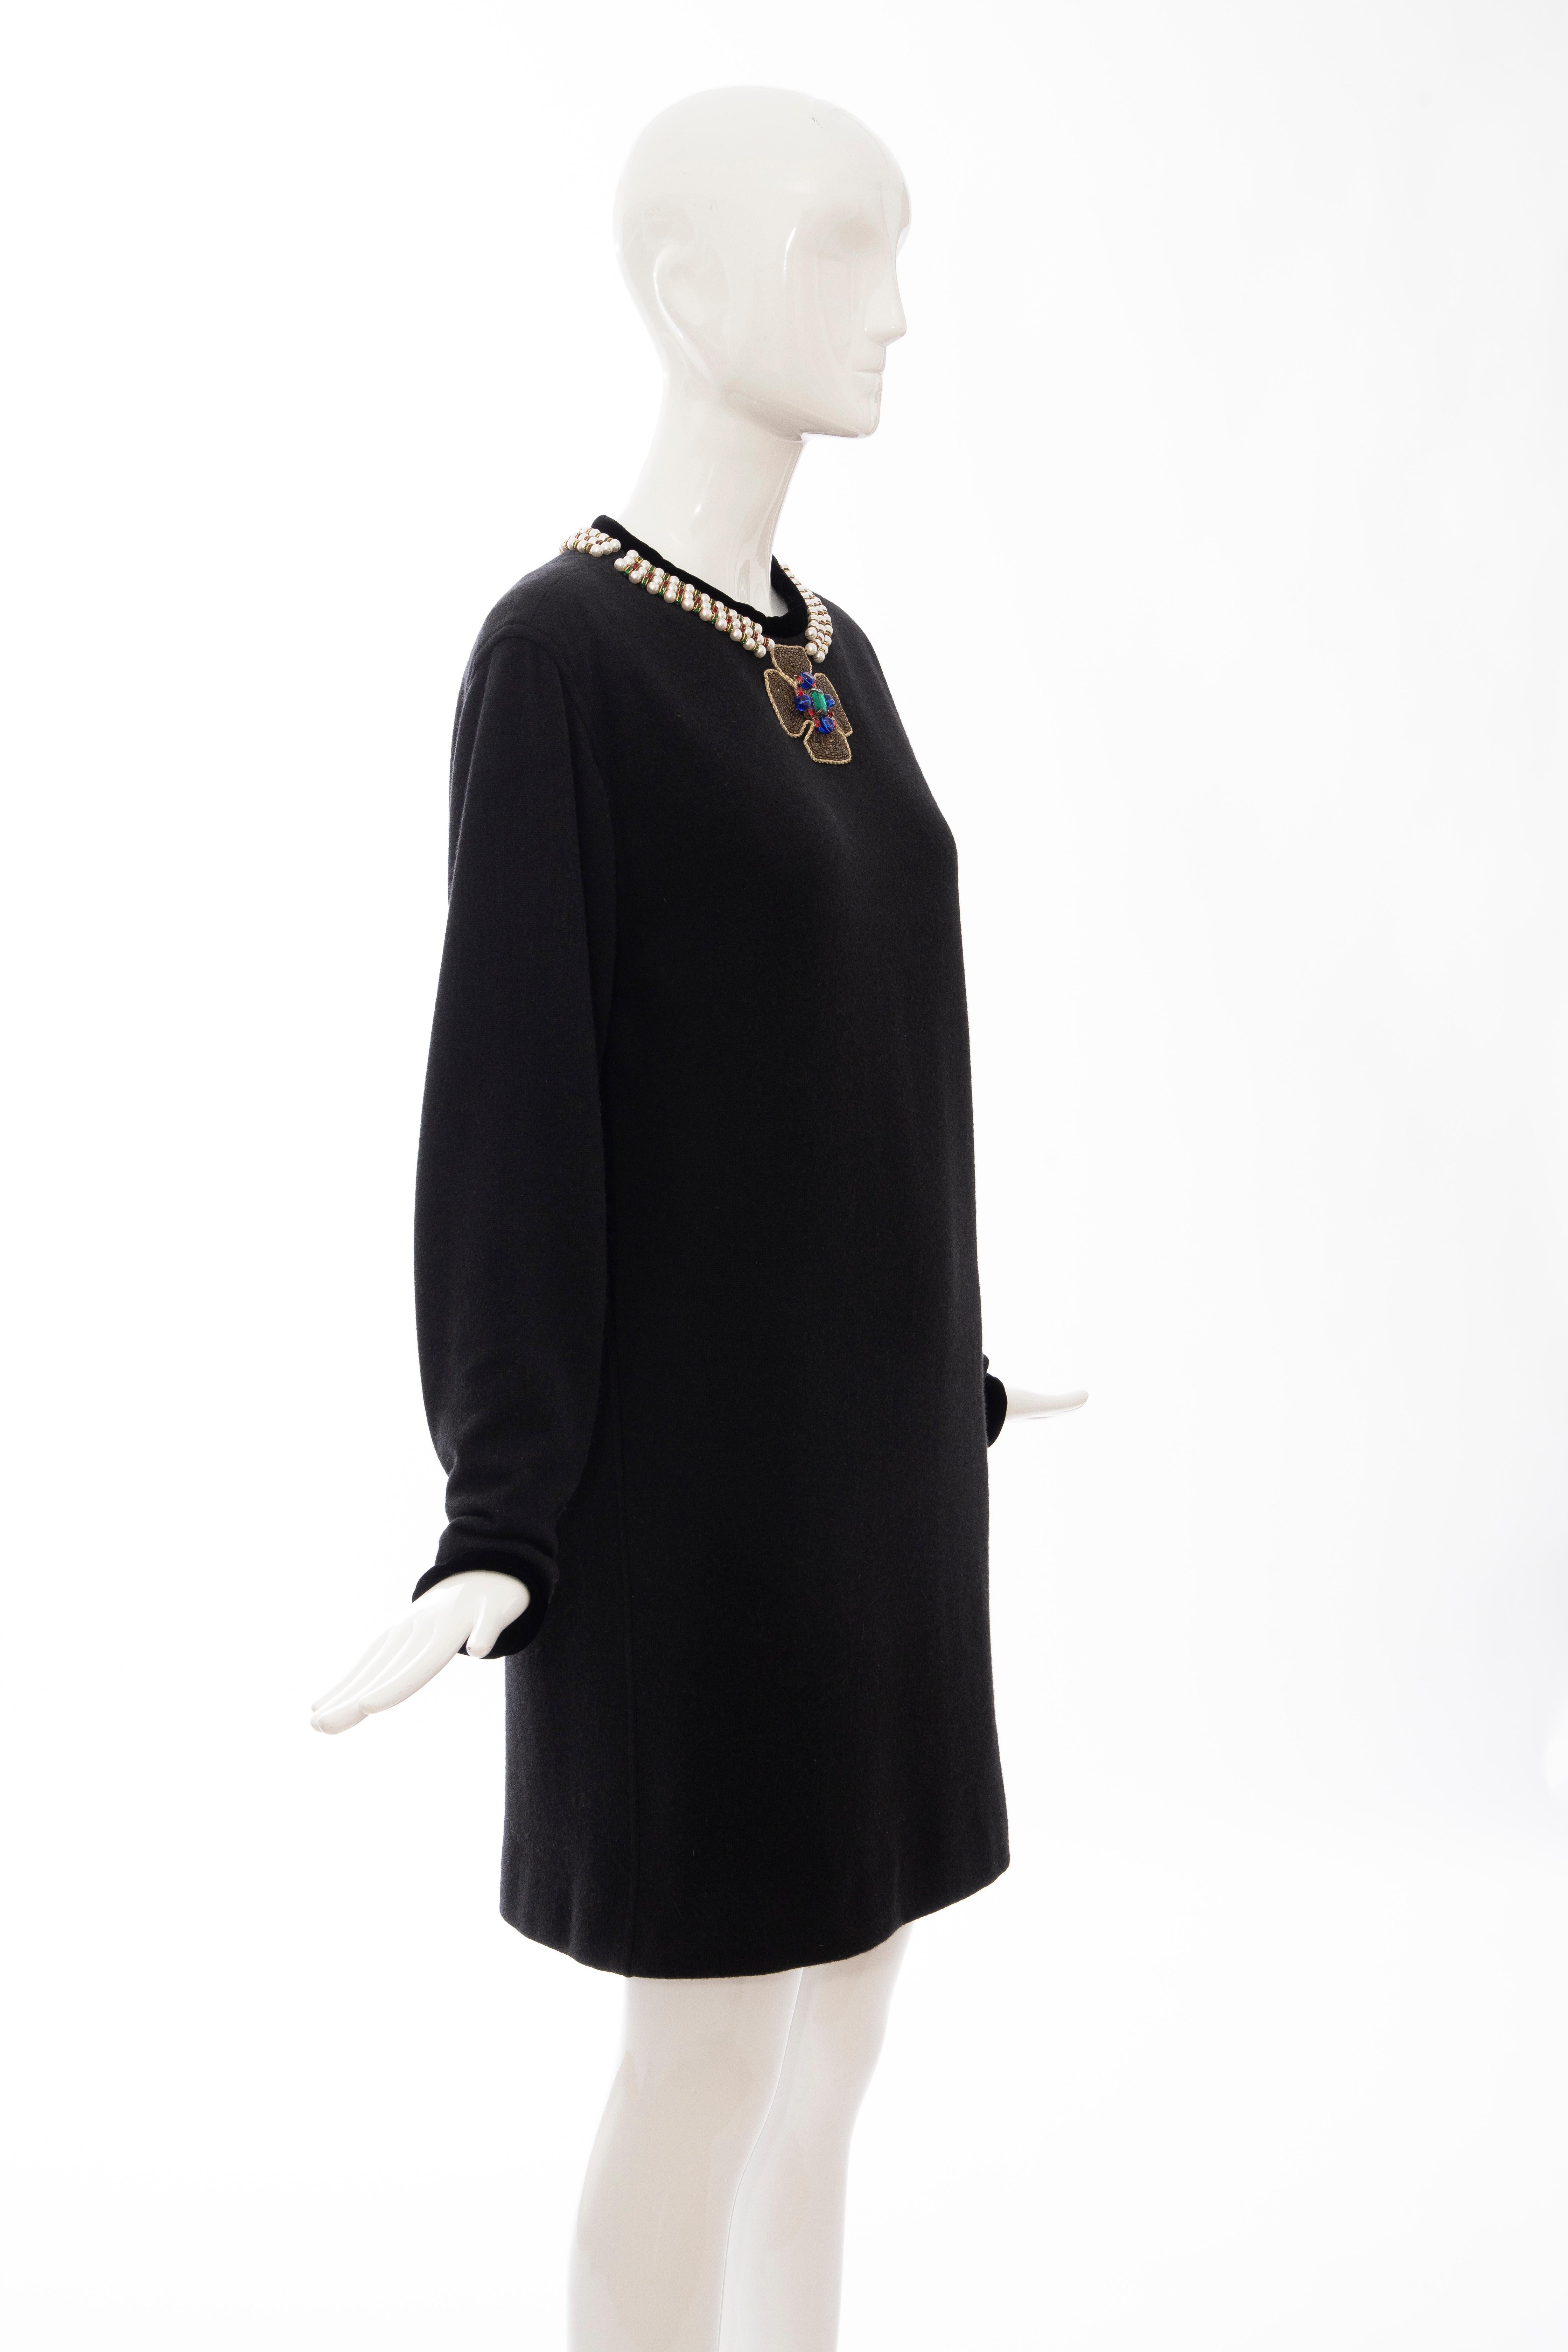 Oscar de la Renta Runway Black Embroidered Neckline Sweater Dress, Fall 1984 In Excellent Condition For Sale In Cincinnati, OH